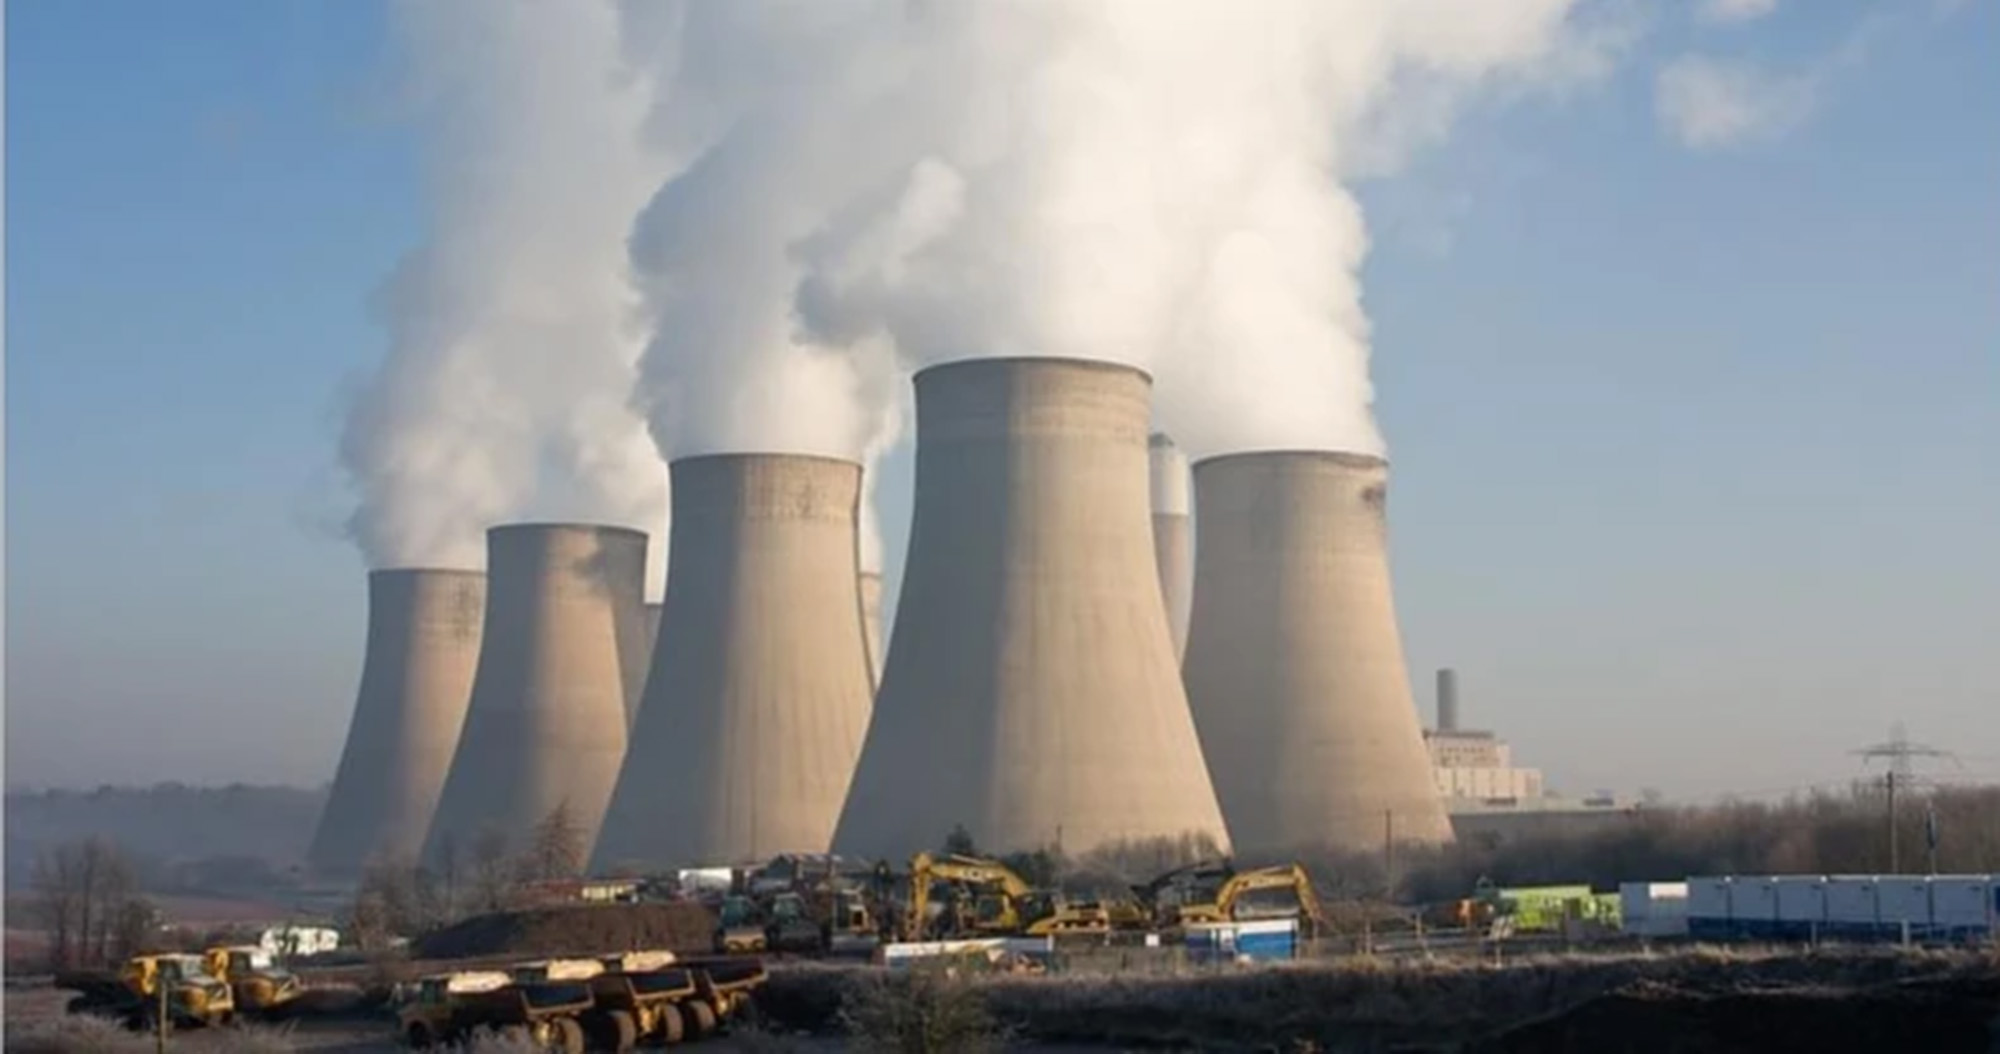 Britain’s last coal plant in line for £31m handout